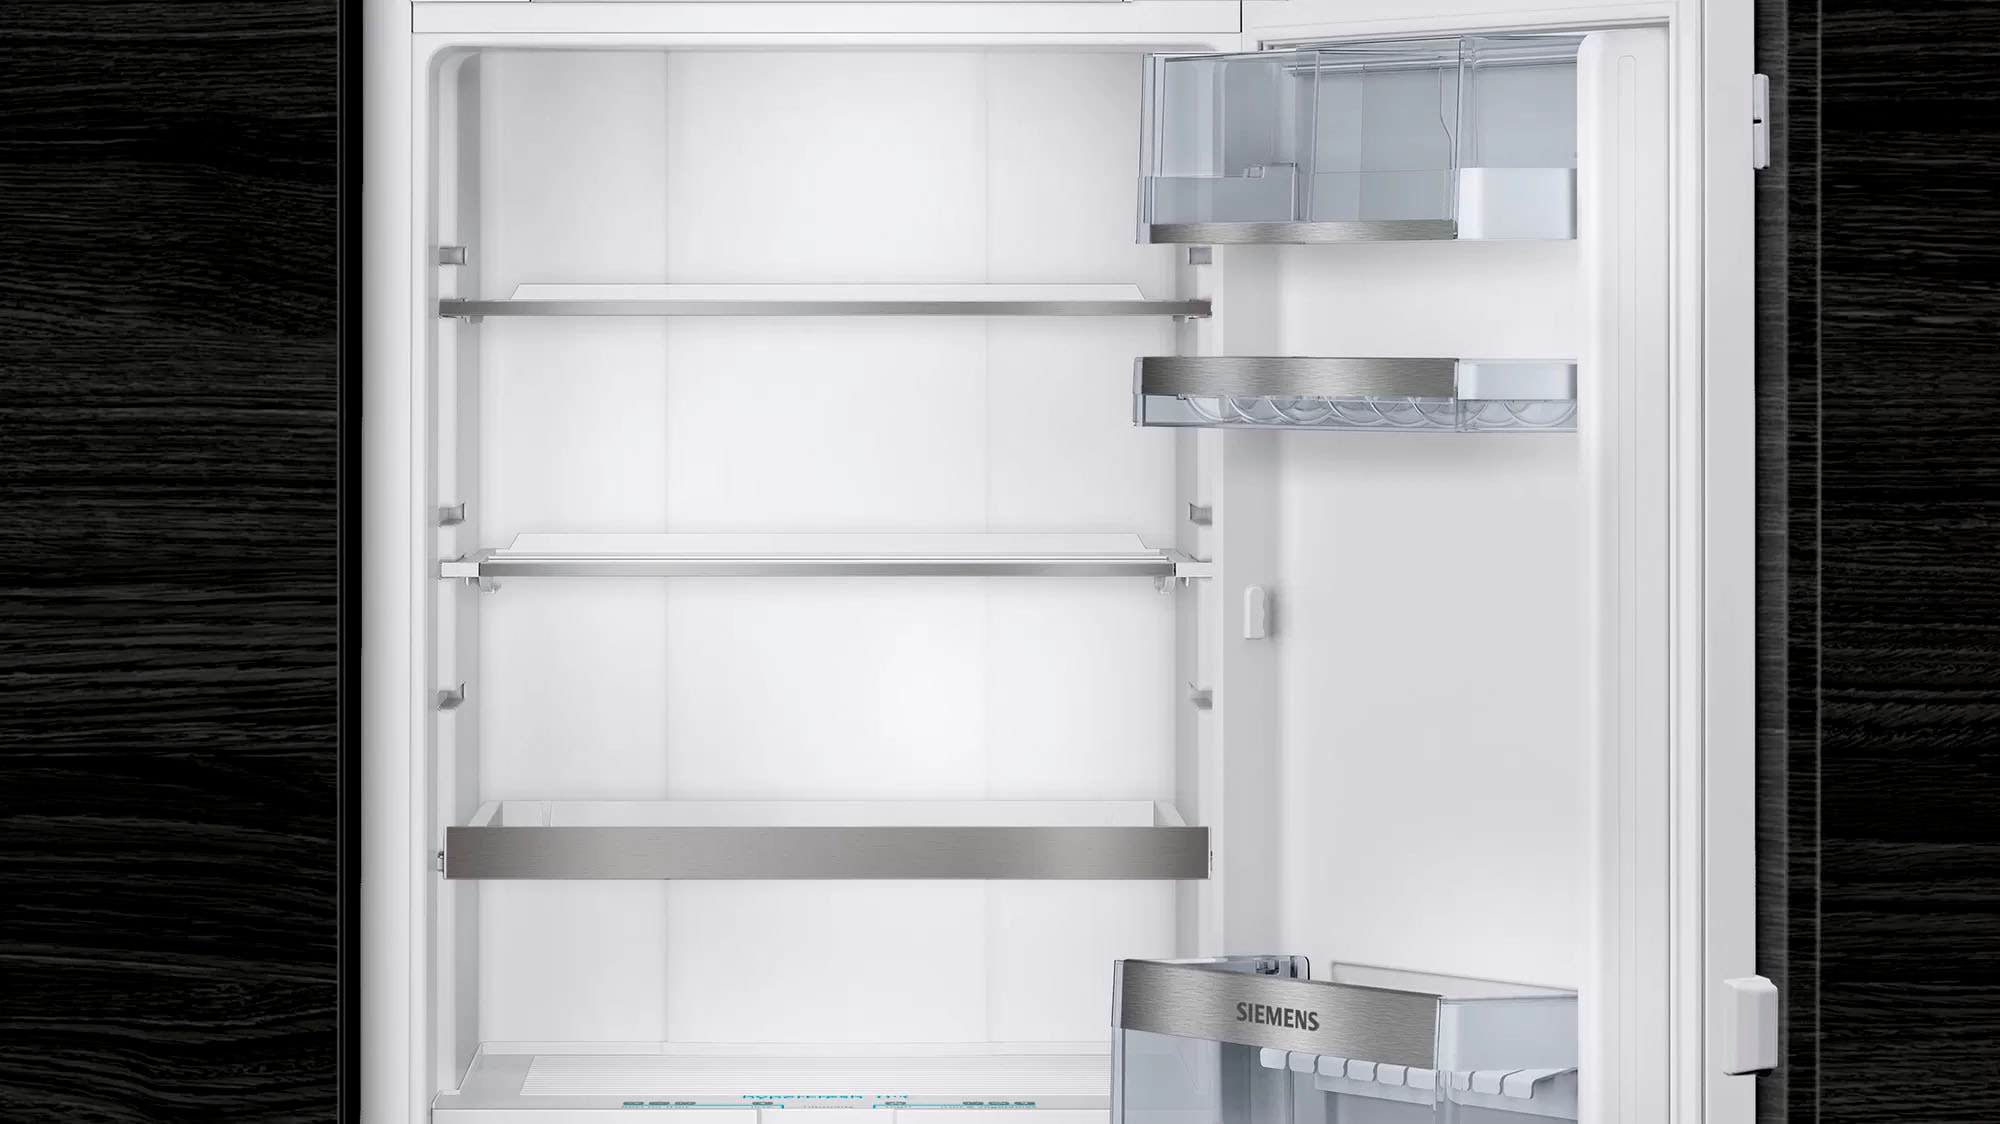 SIEMENS Einbaukühlschrank »KI41FADE0«, KI41FADE0, 122,1 cm hoch, 55,8 cm breit